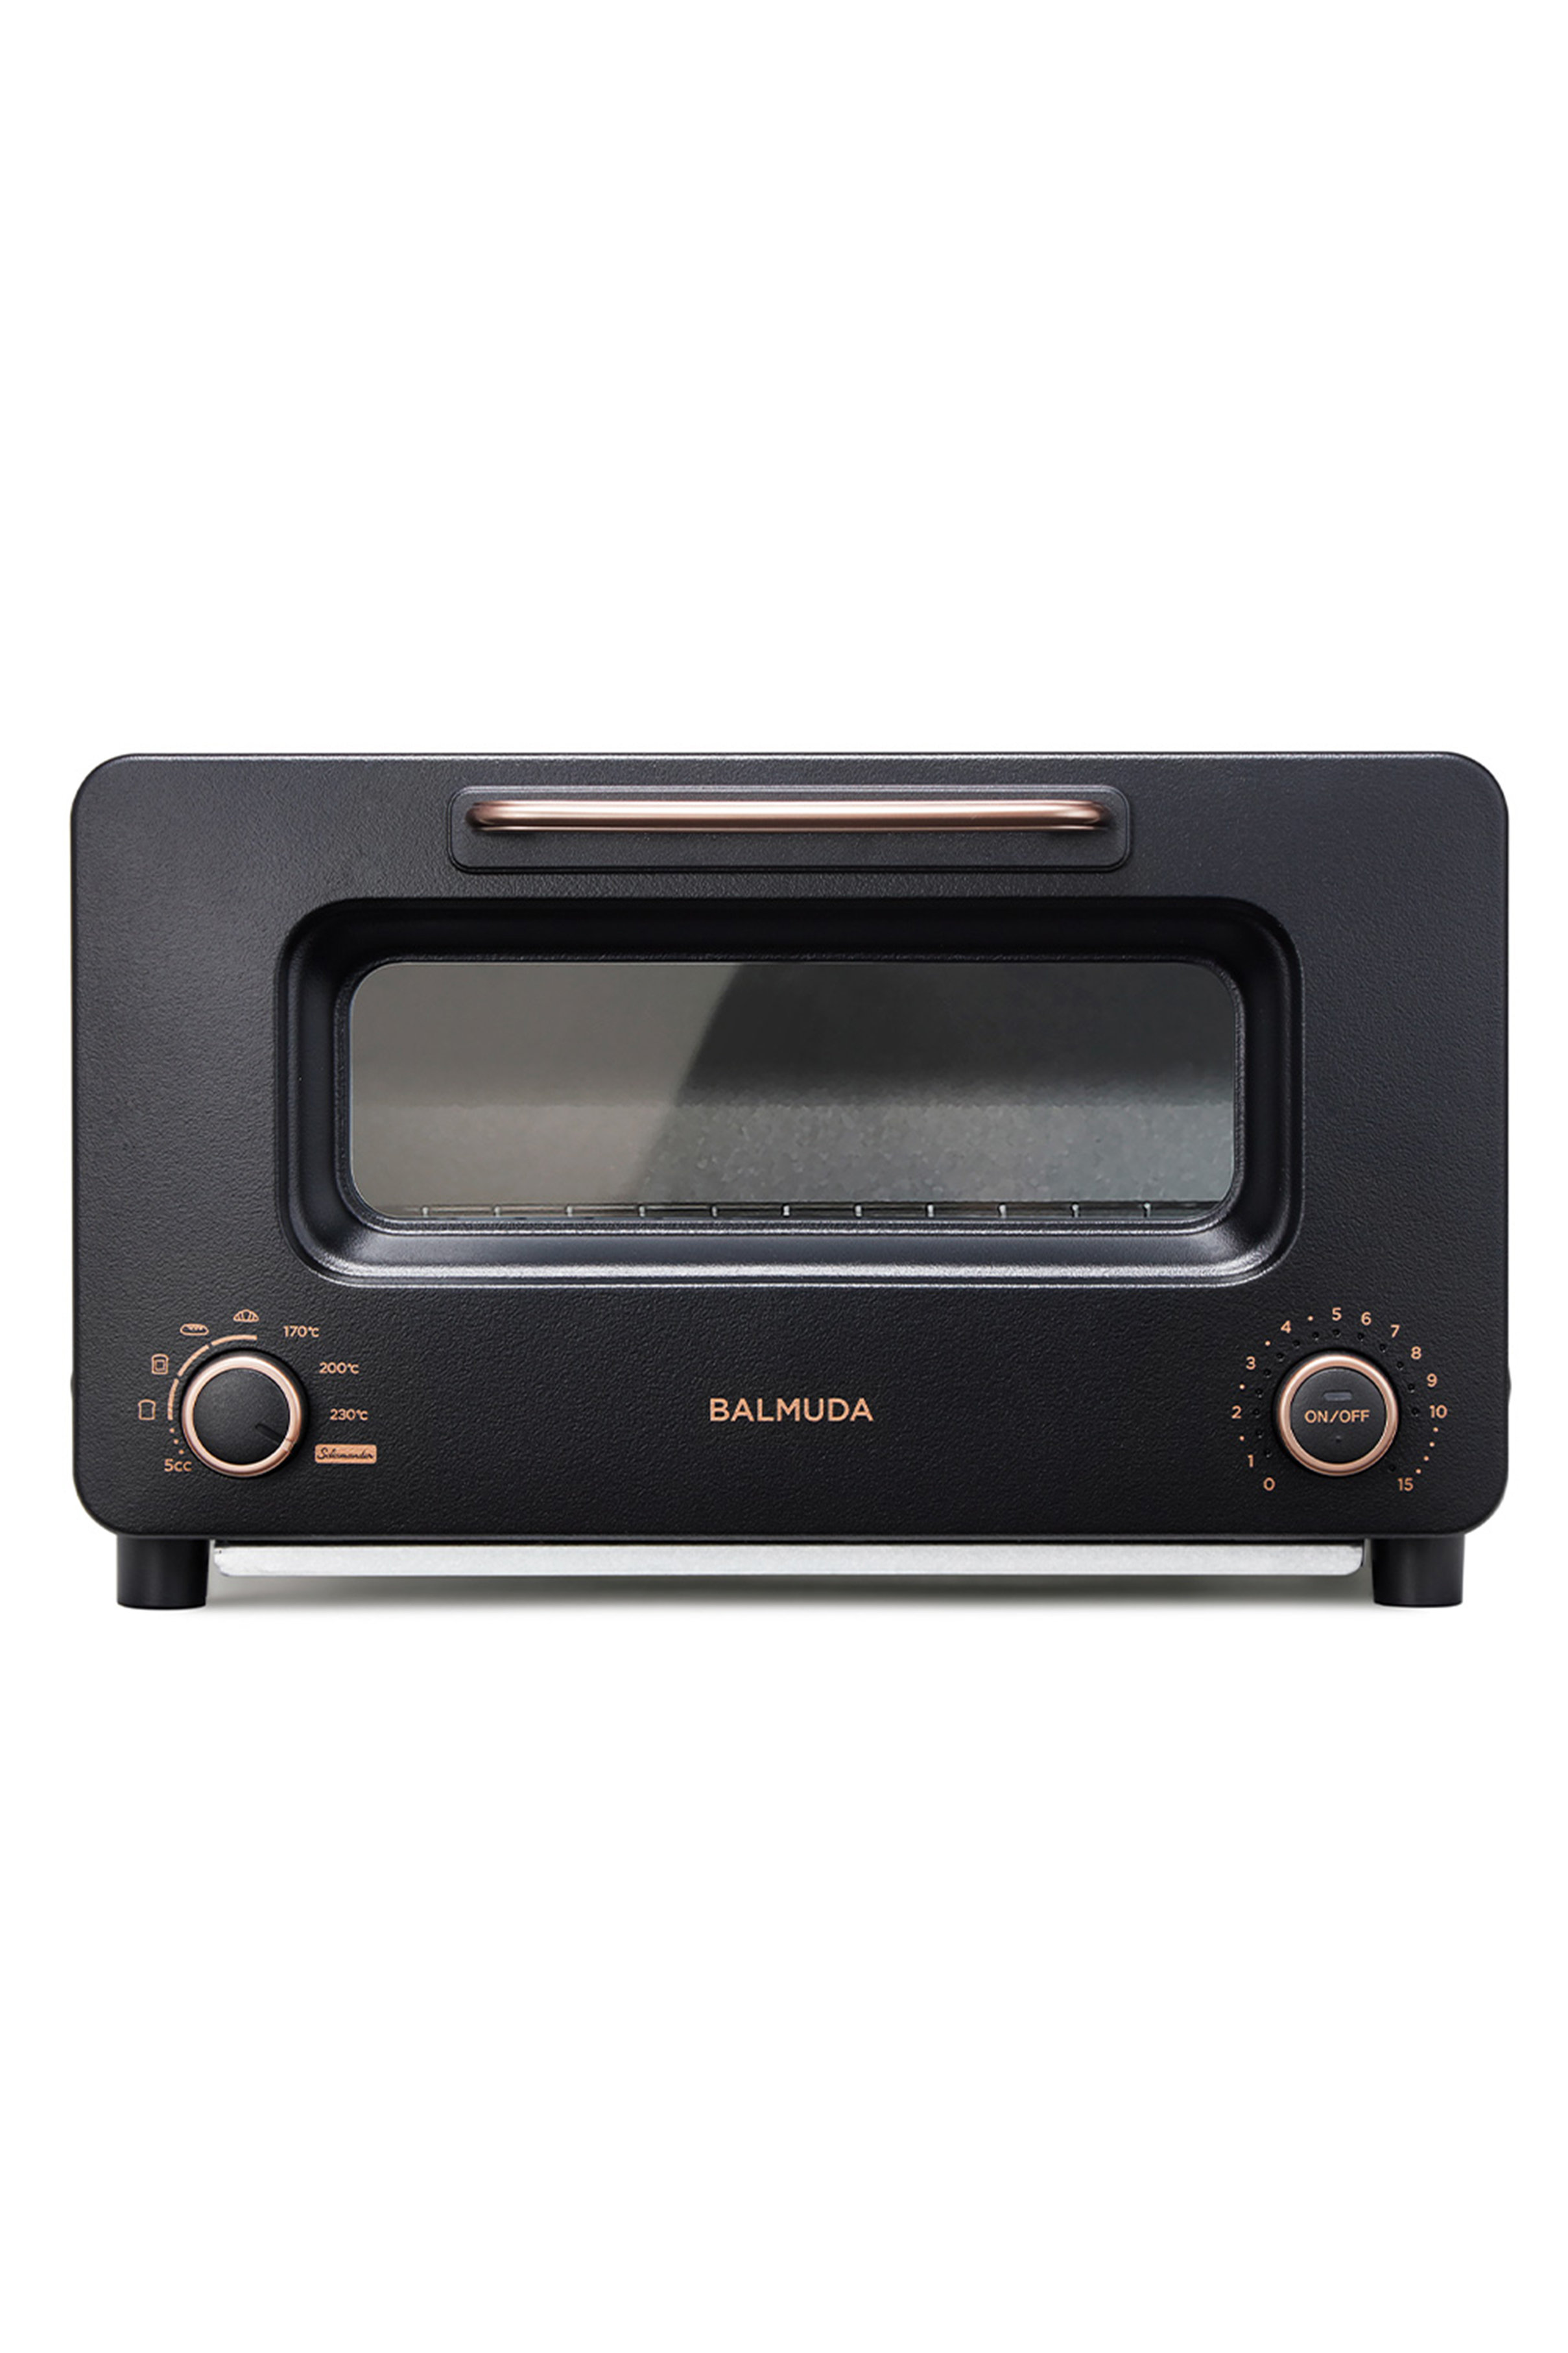 SEMPRE Balmuda The ToasterPro (ブラック N/S) センプレ ELLE SHOPの大画像